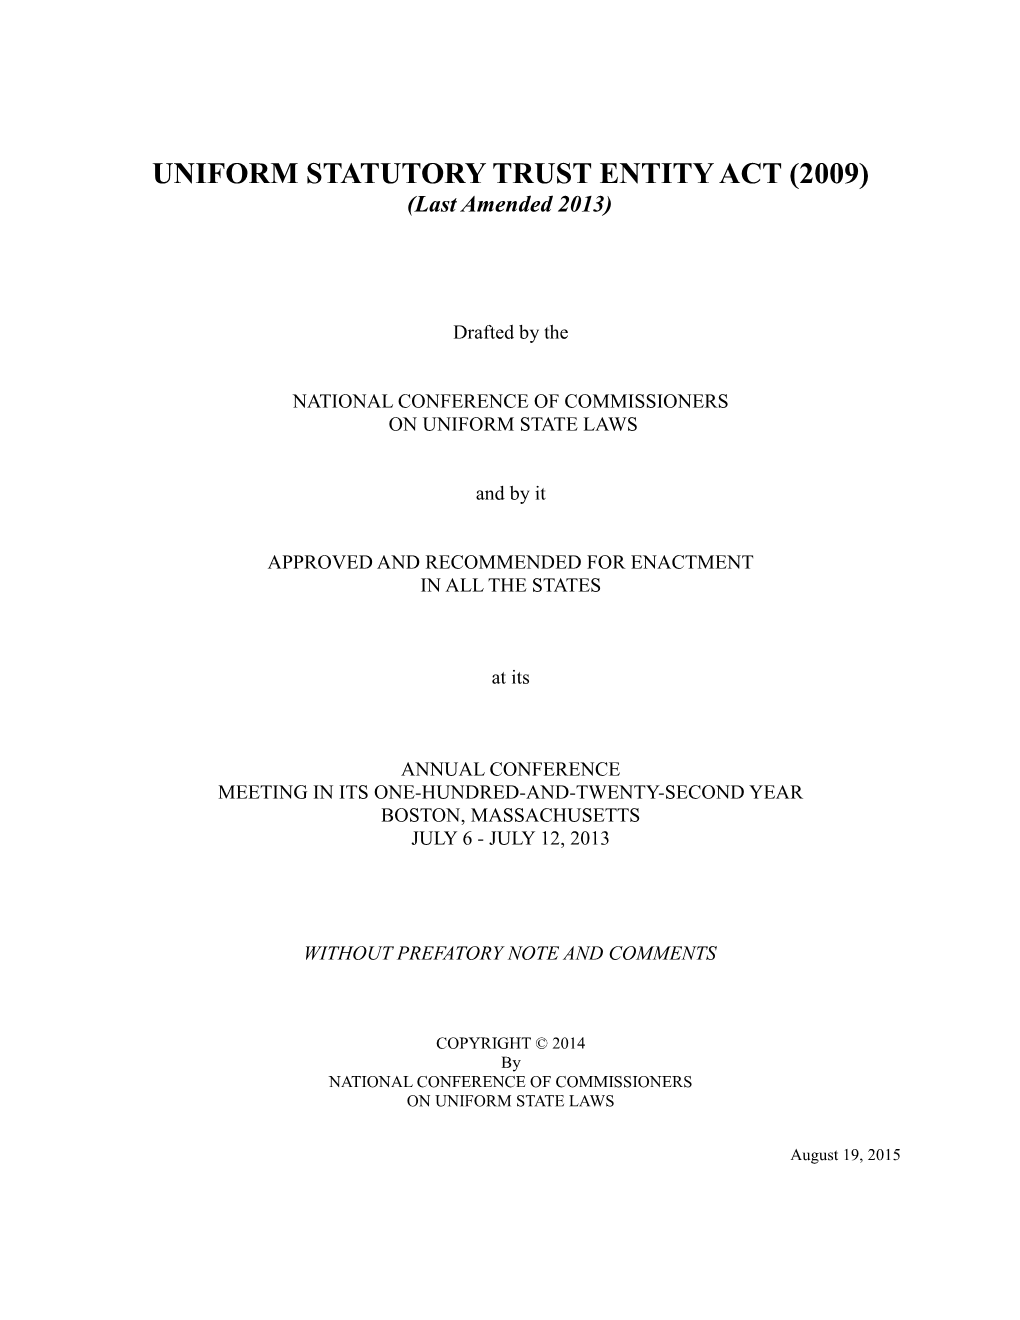 Uniform Statutory Trust Entity Act (2009)